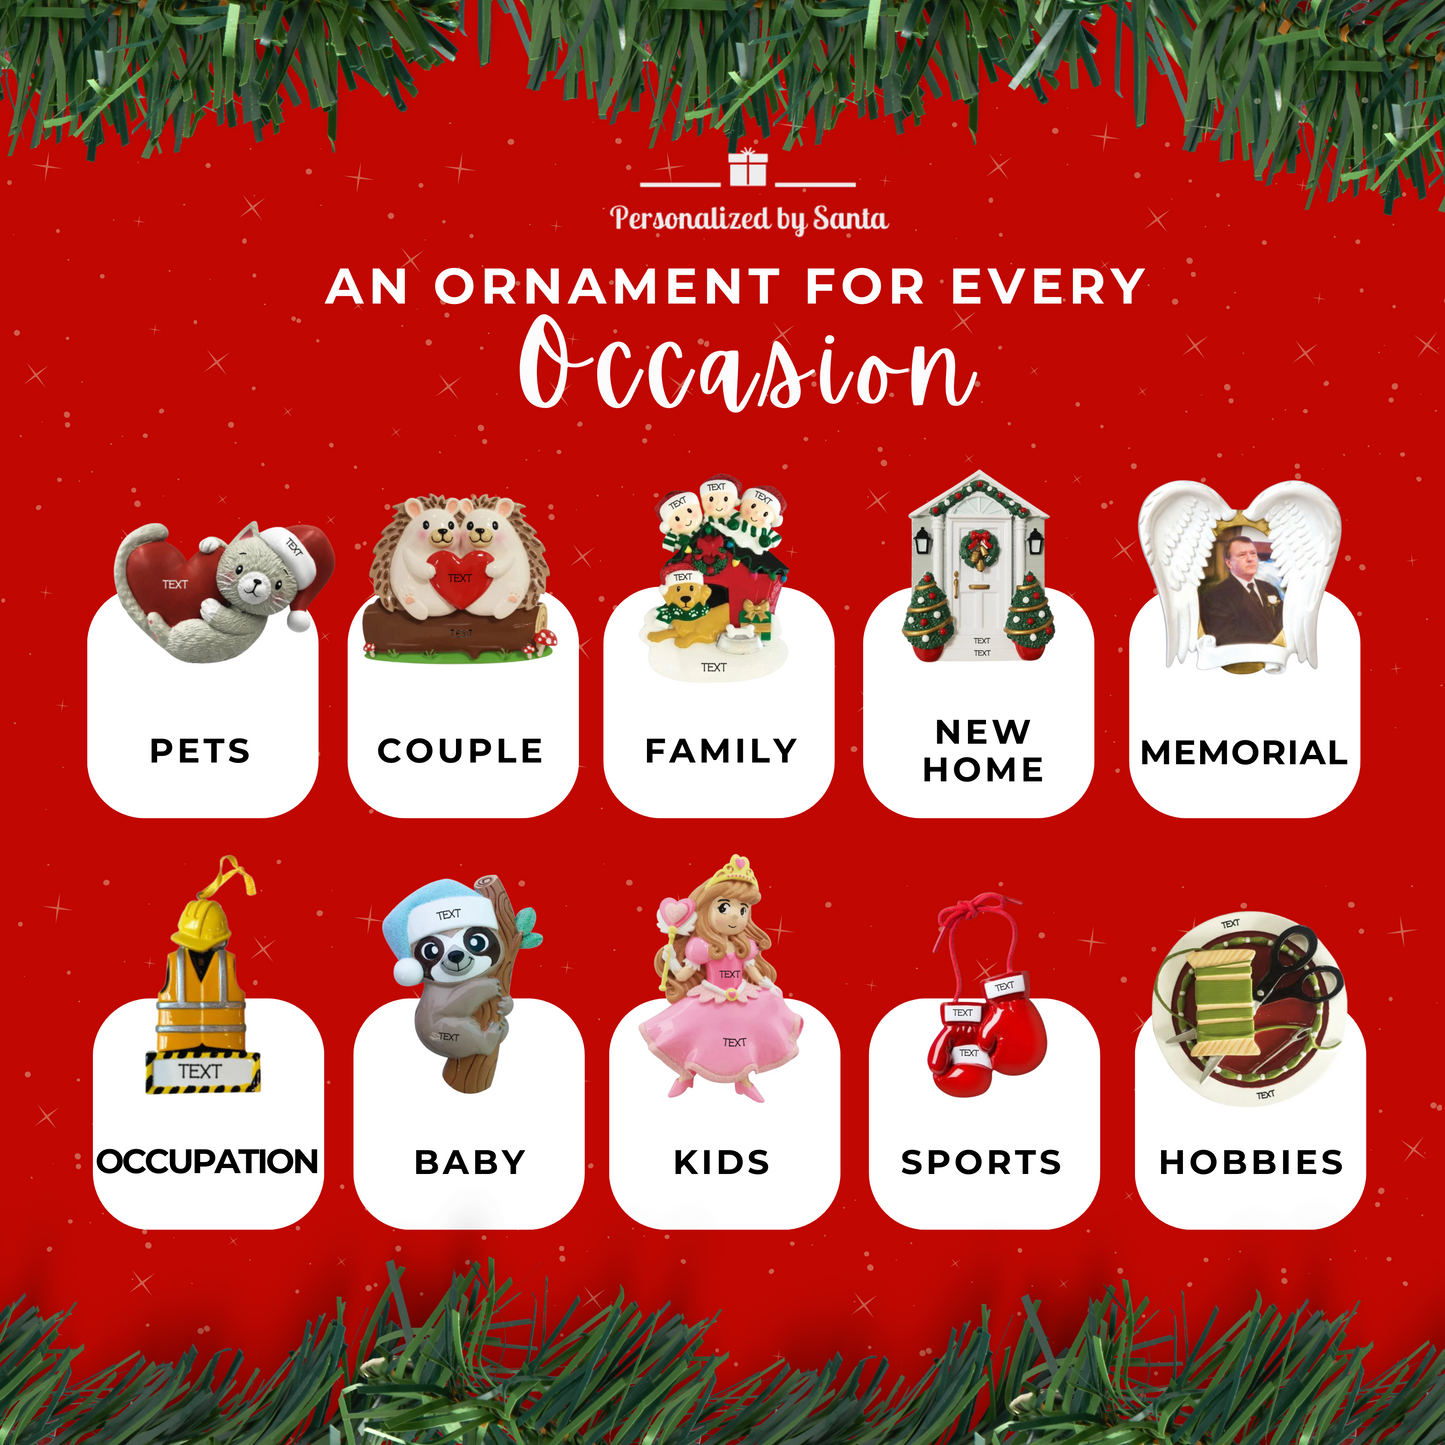 North Pole Family of 4 Ornament